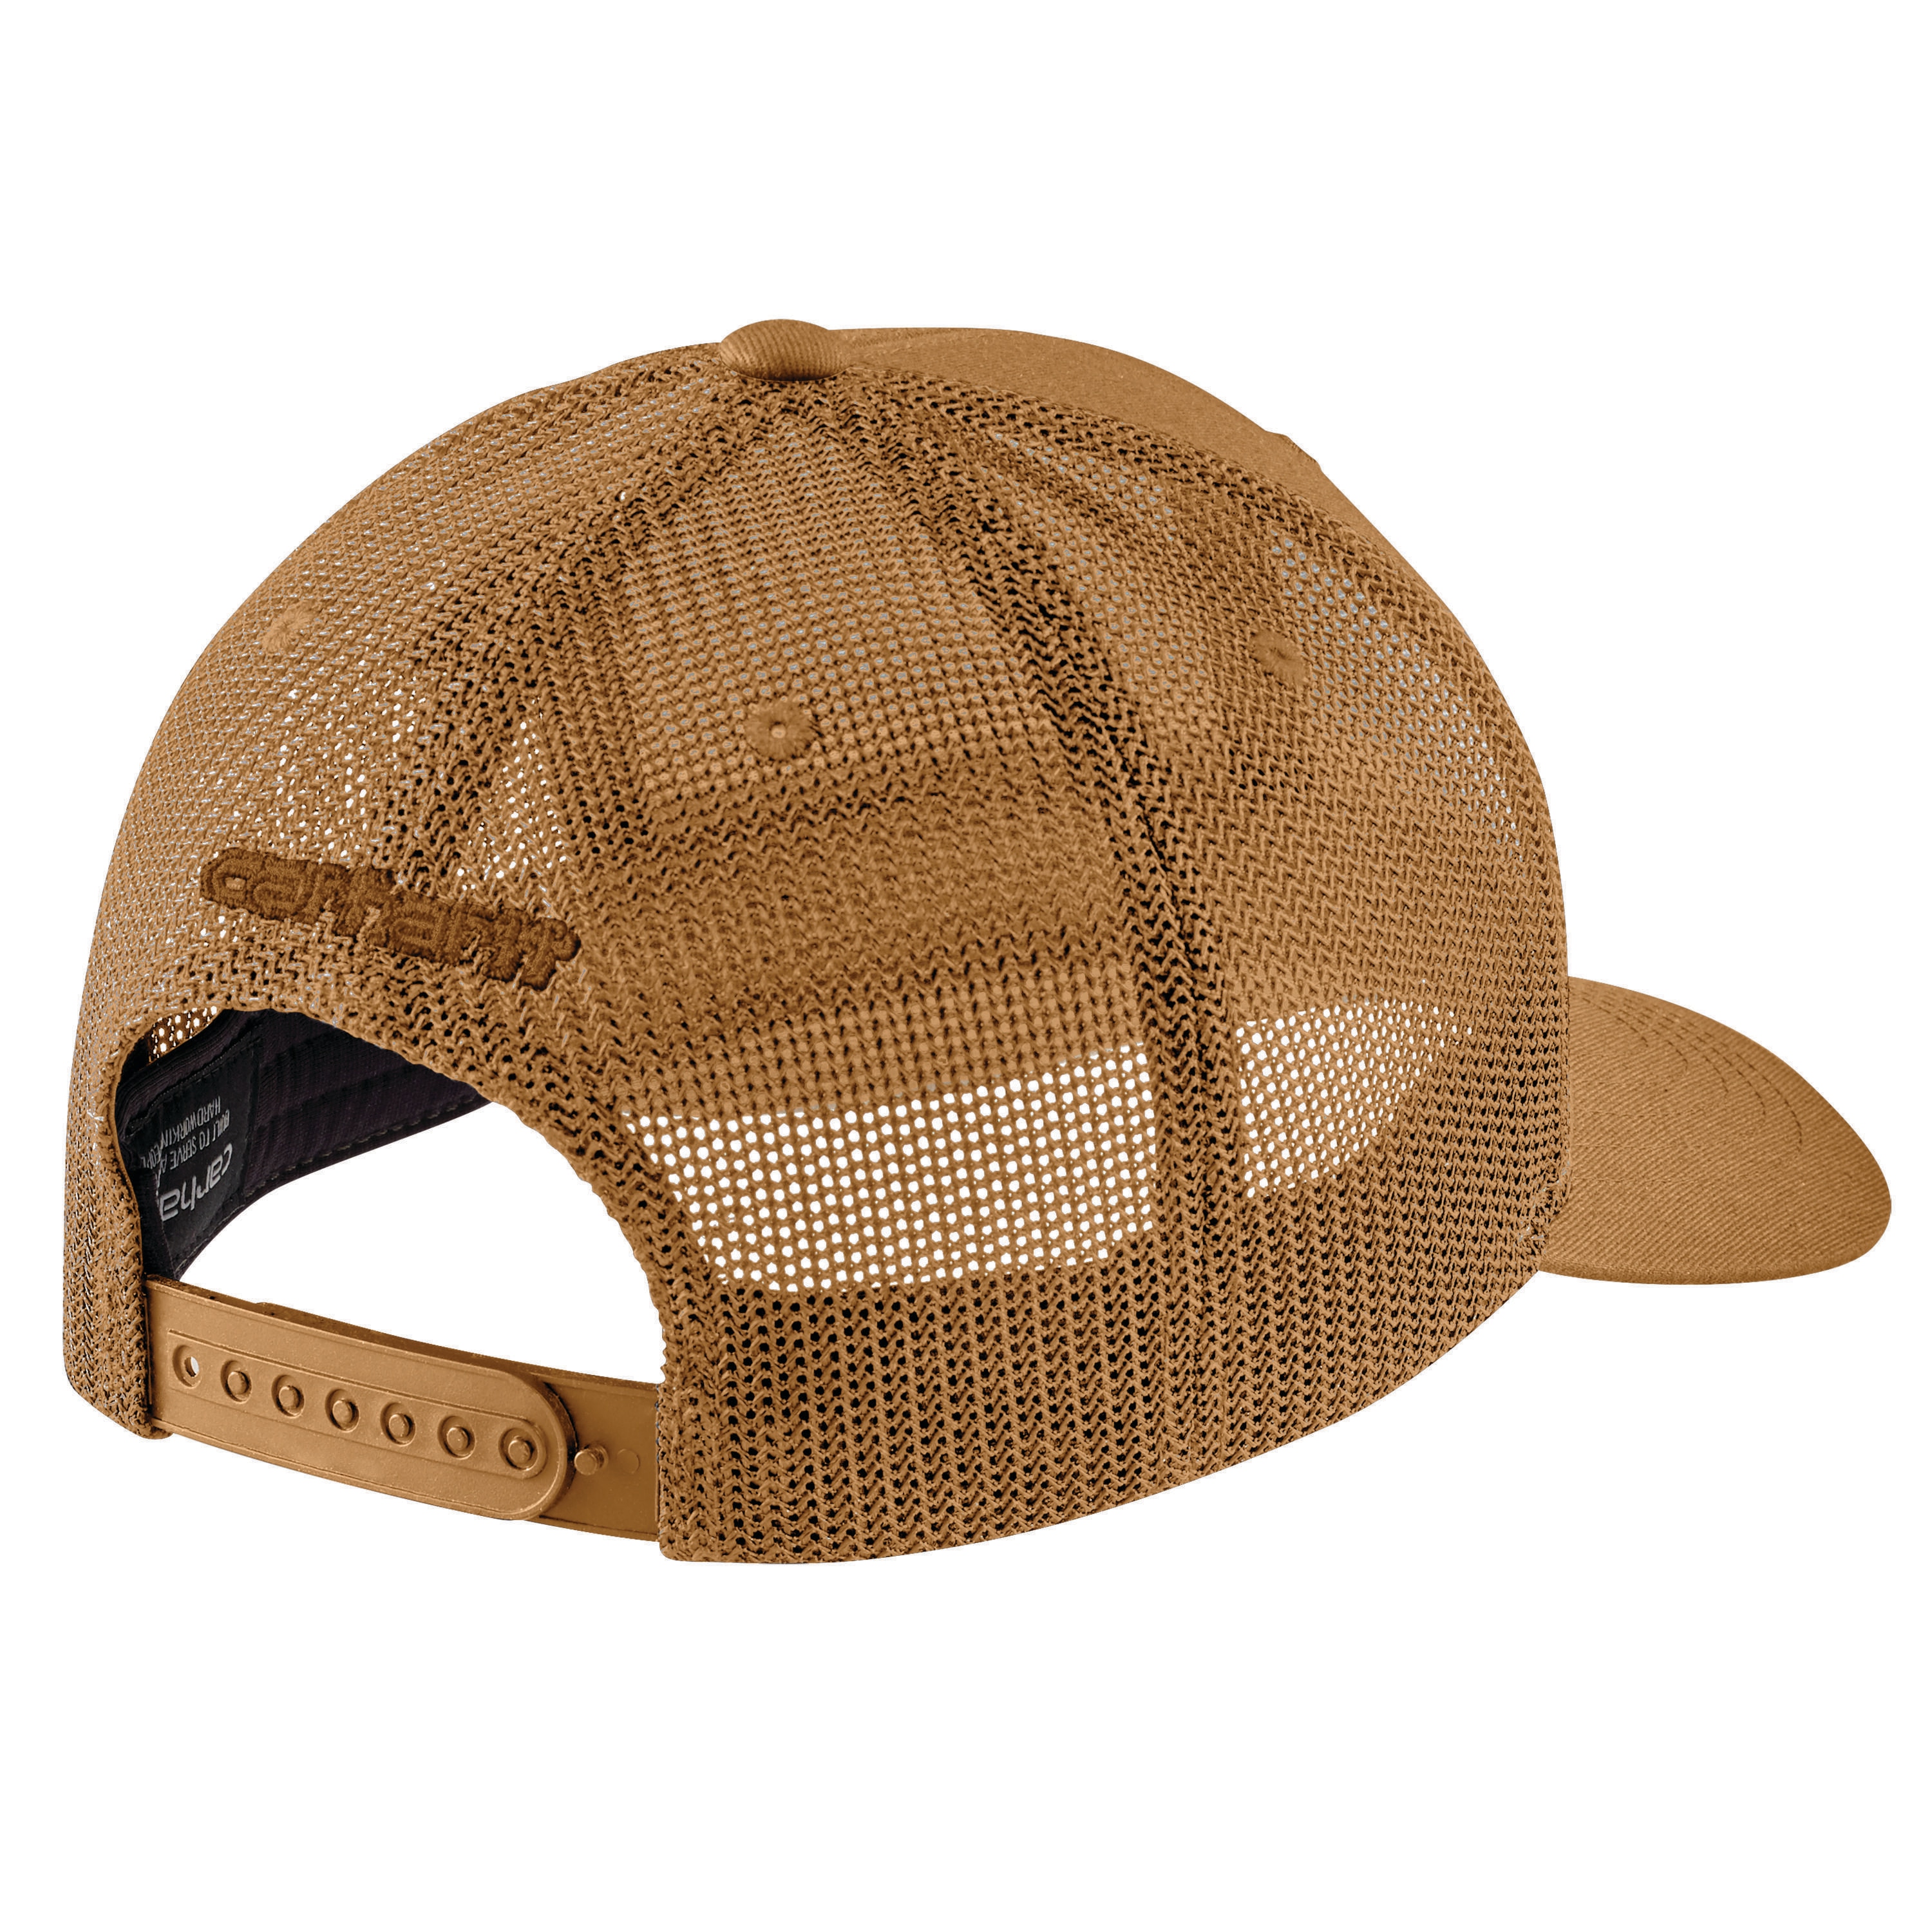 Carhartt Men's Carhartt Brown/Honeycomb Cotton Baseball Cap in the Hats  department at